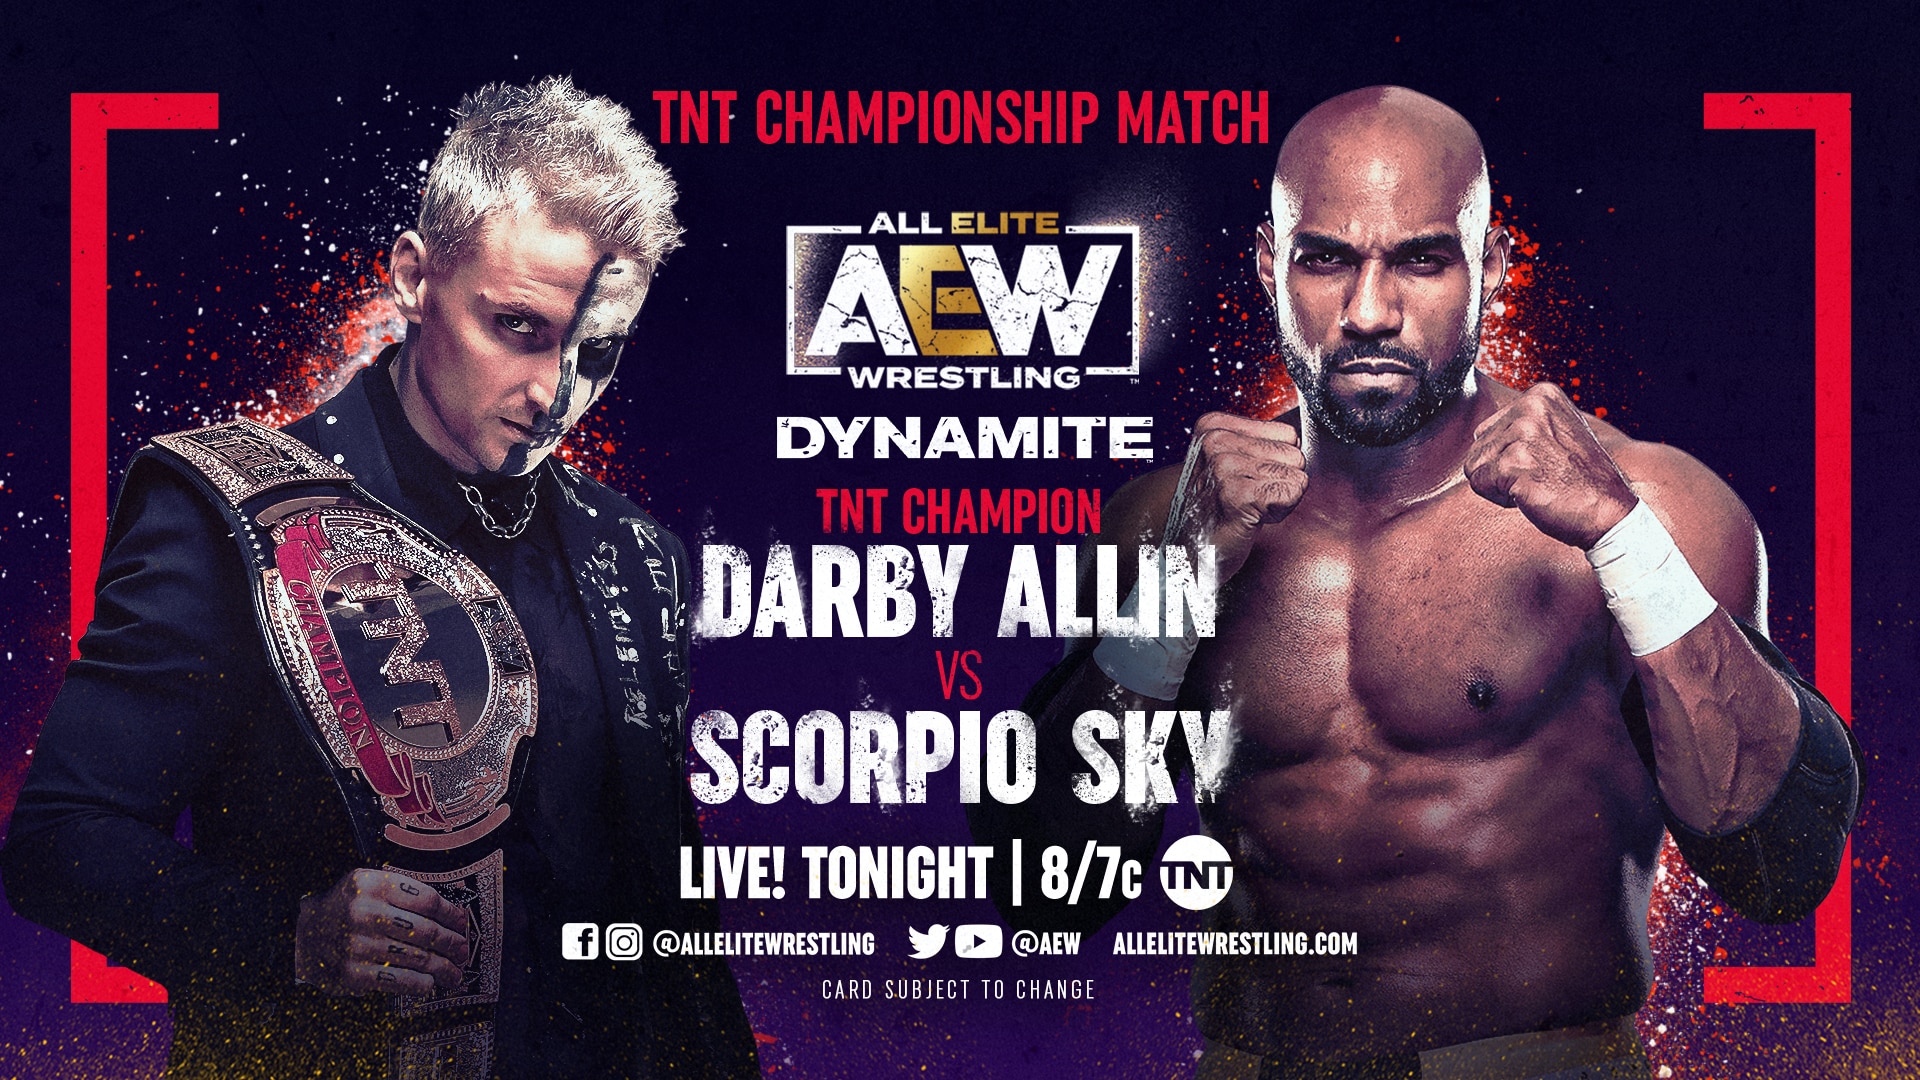 Darby Allin vs Scorpio Sky